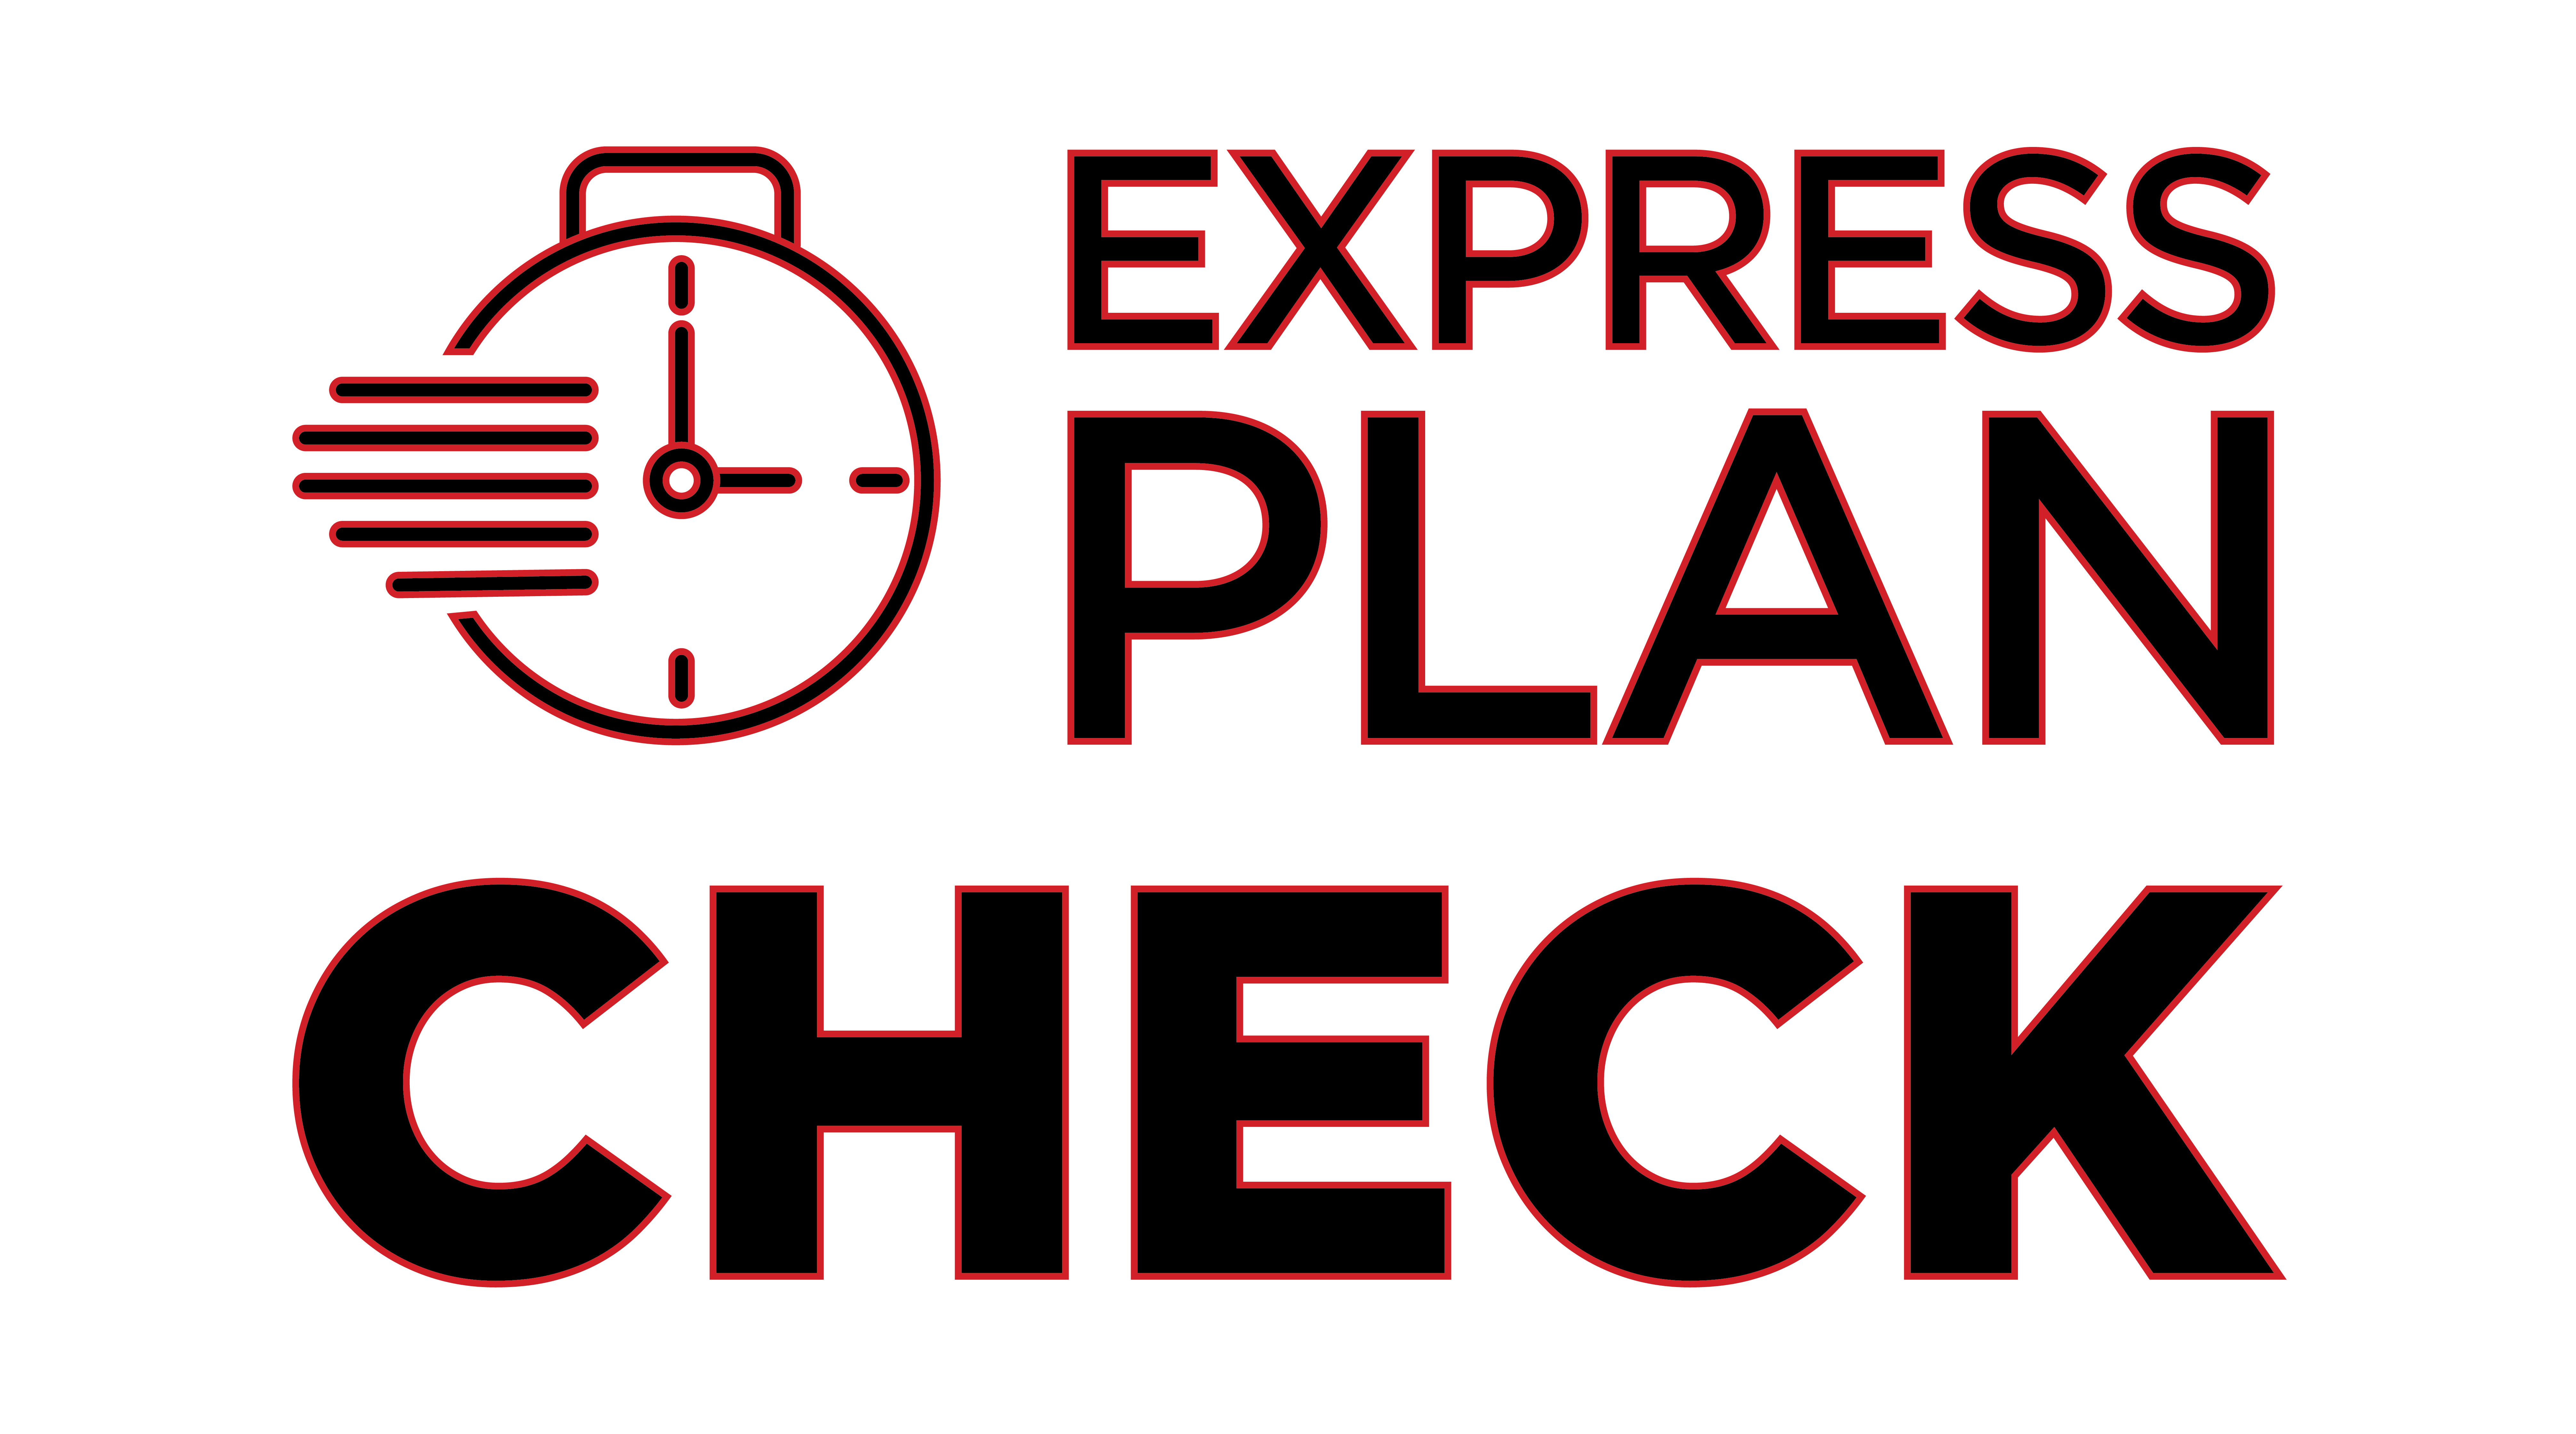 express plan check logo depicting a fast clock